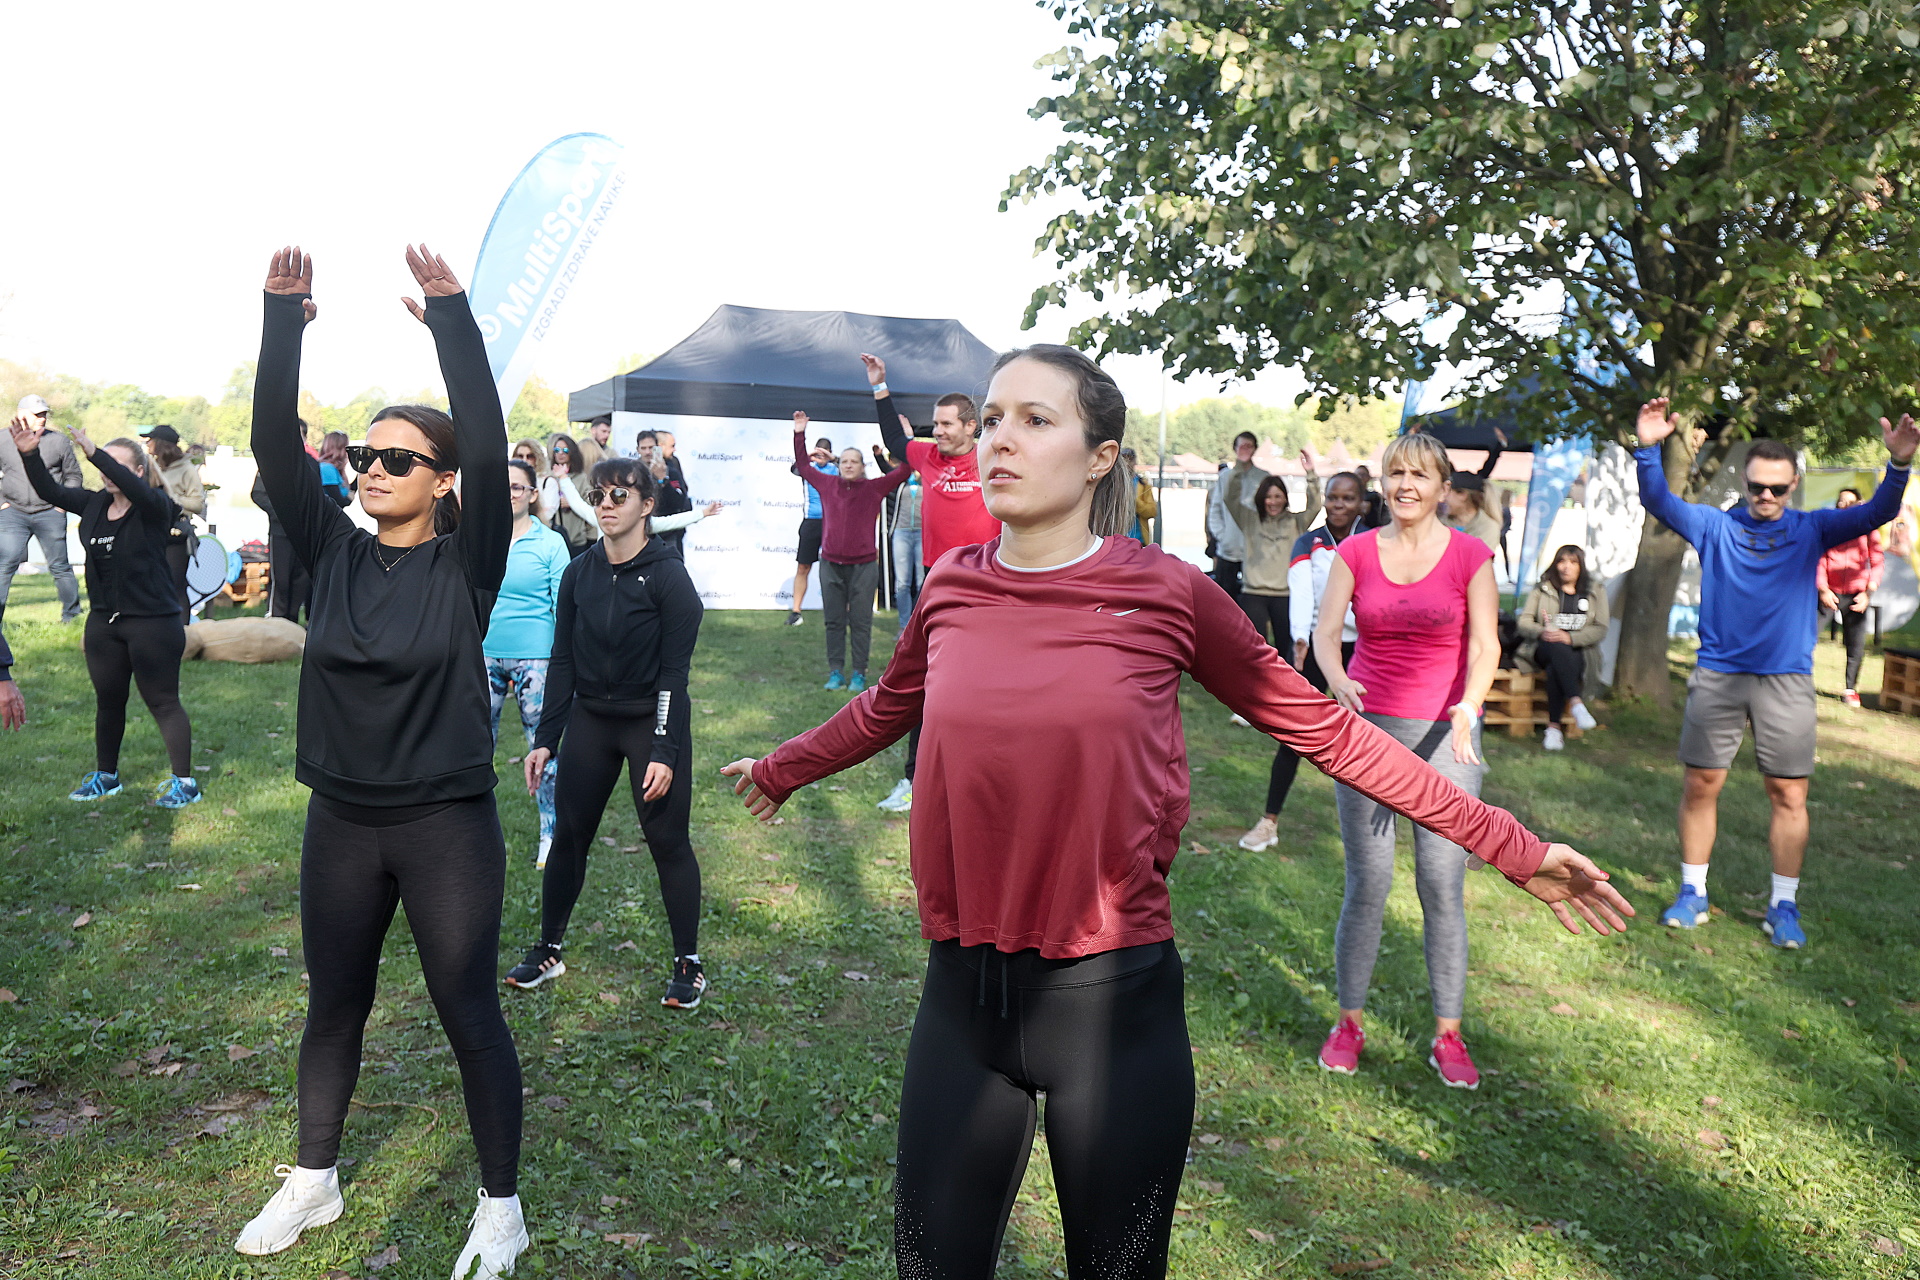 24.09.2022., Zagreb - MultiSport Health Fest - najveci fitness festival o zdravom zivotu i prehrani odrzao se na zagrebackom jezeru Jarun. 
Photo: Goran Stanzl/PIXSELL